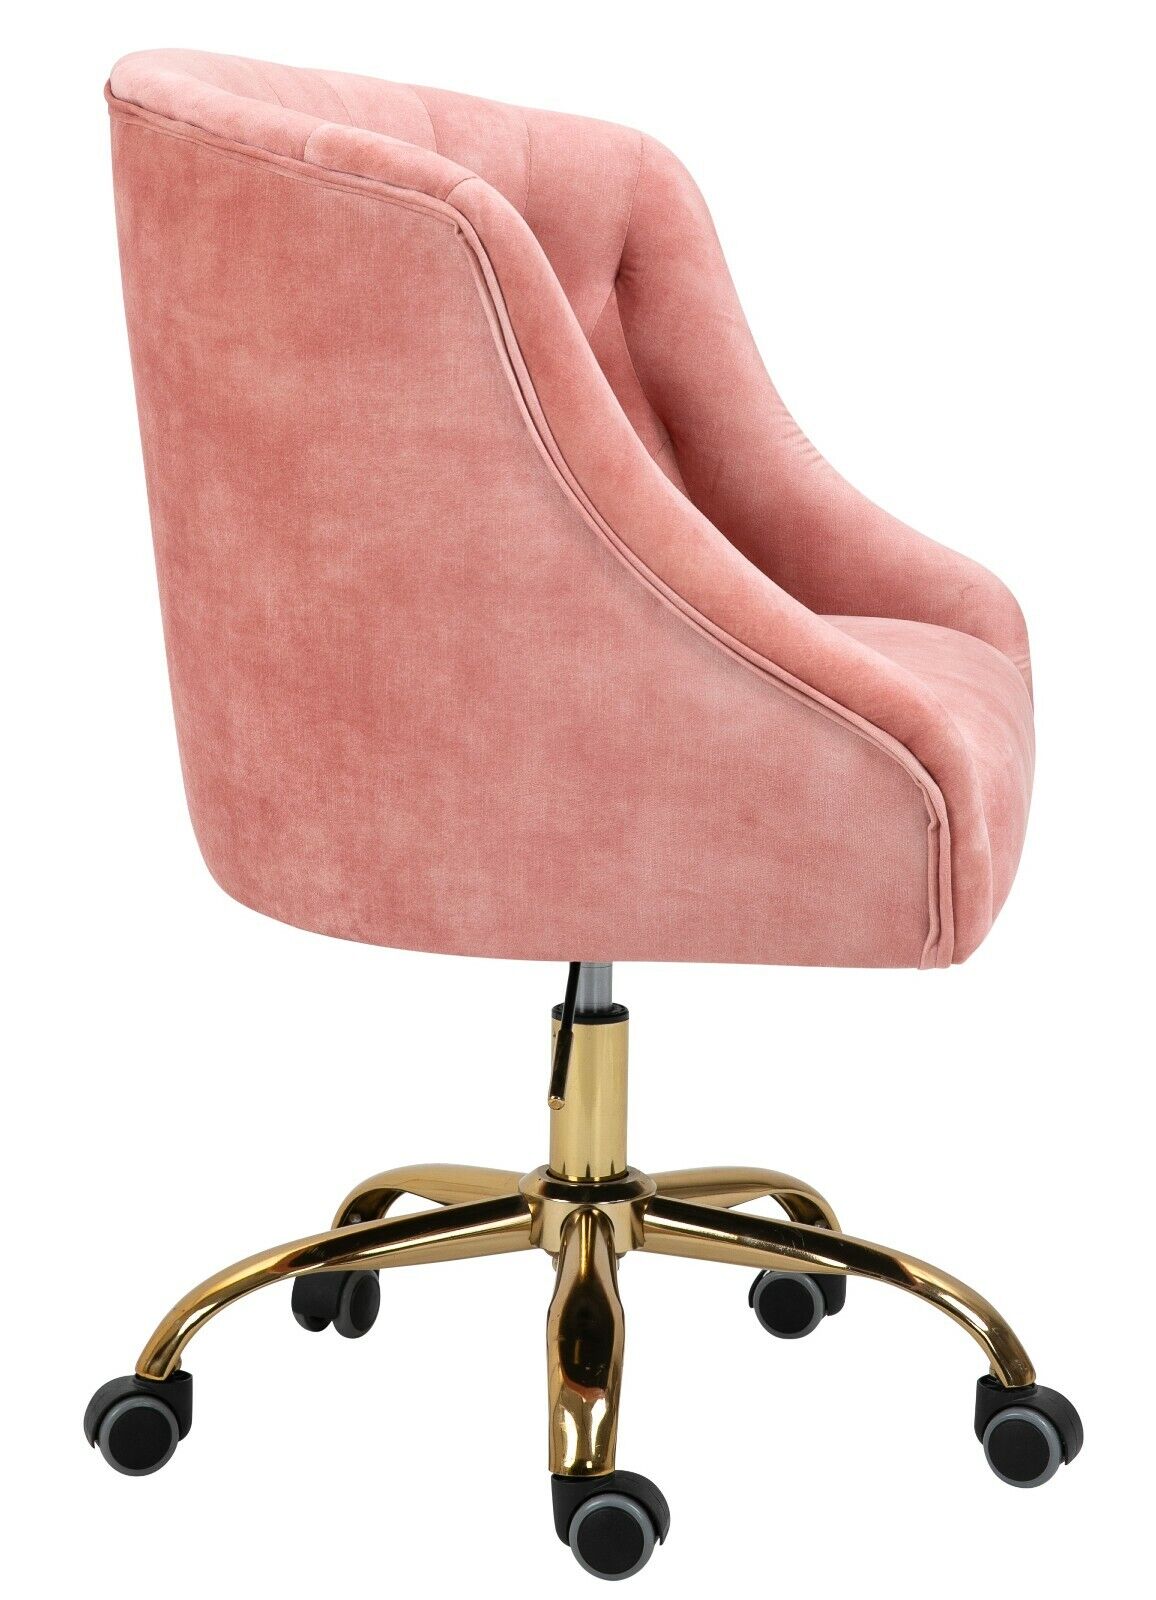 Pink Velvet Fabric Upholstered Tufted Office Chair Home